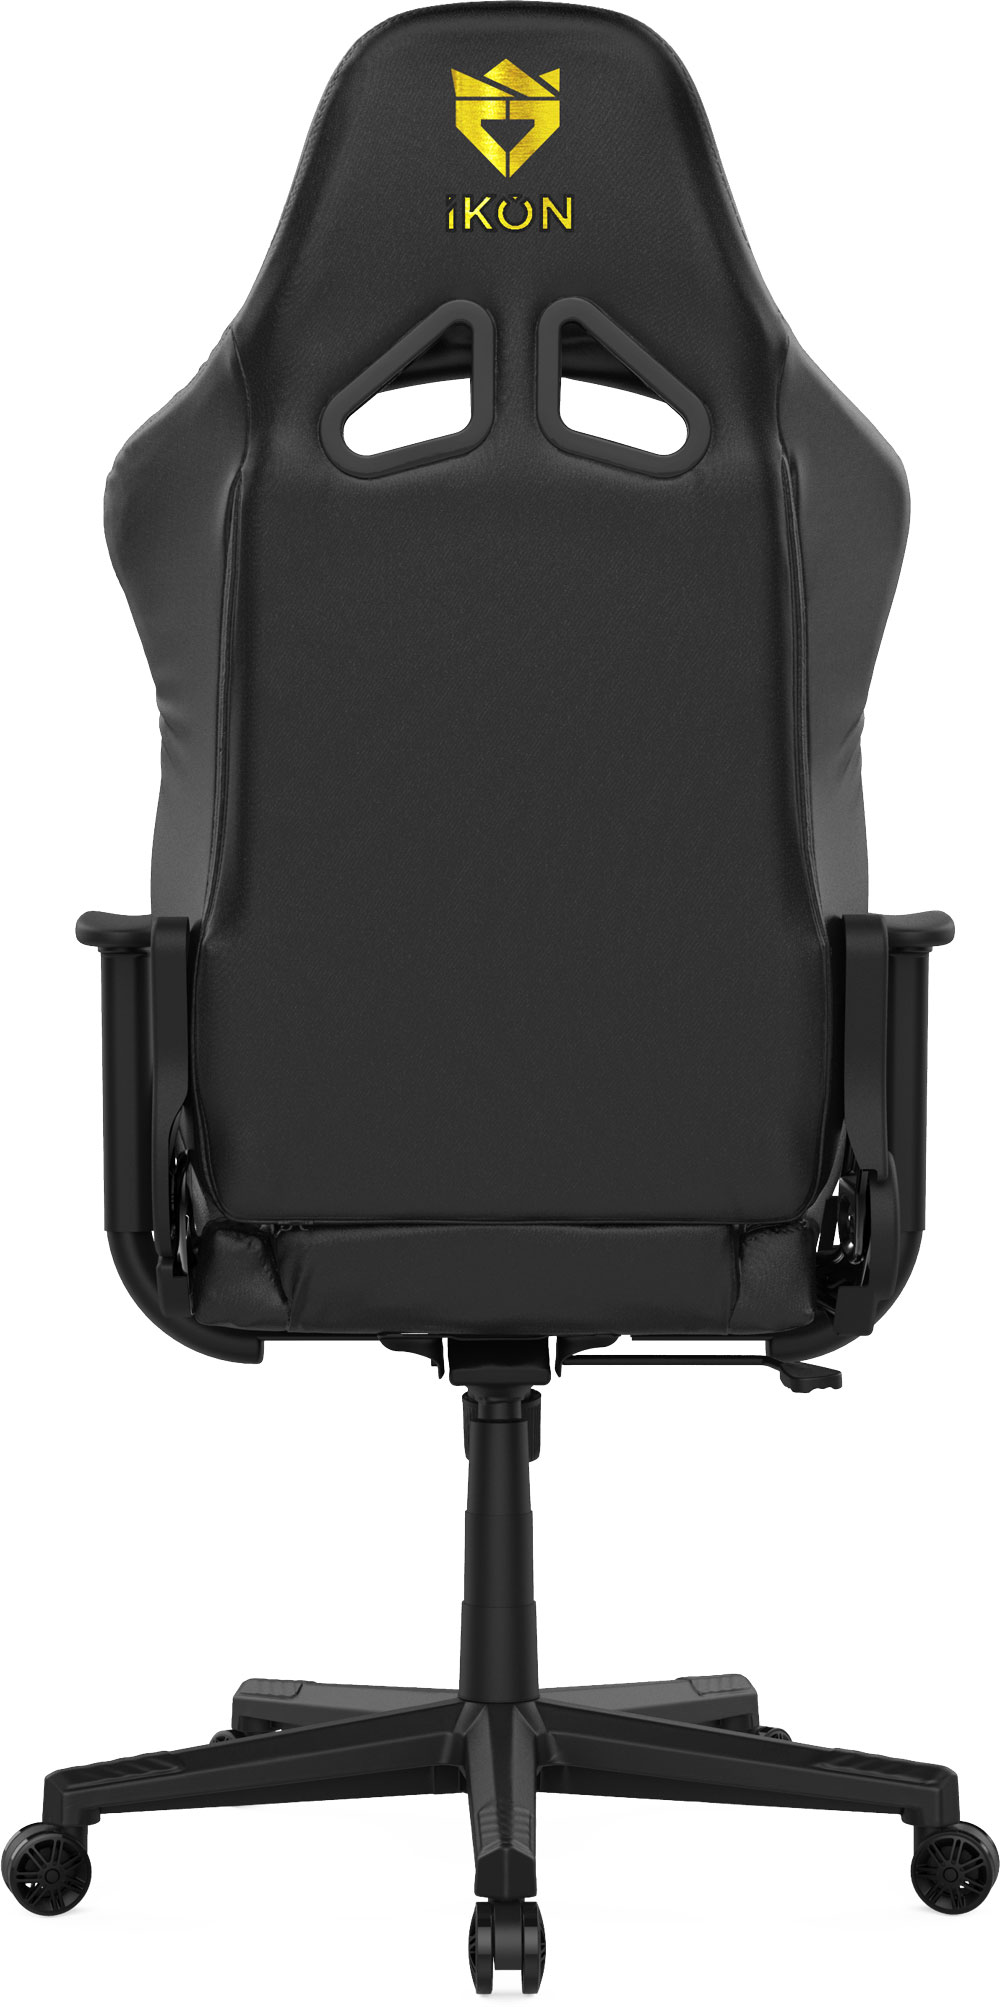 Evetech IKon-Shift-300 Gaming Chair - Black